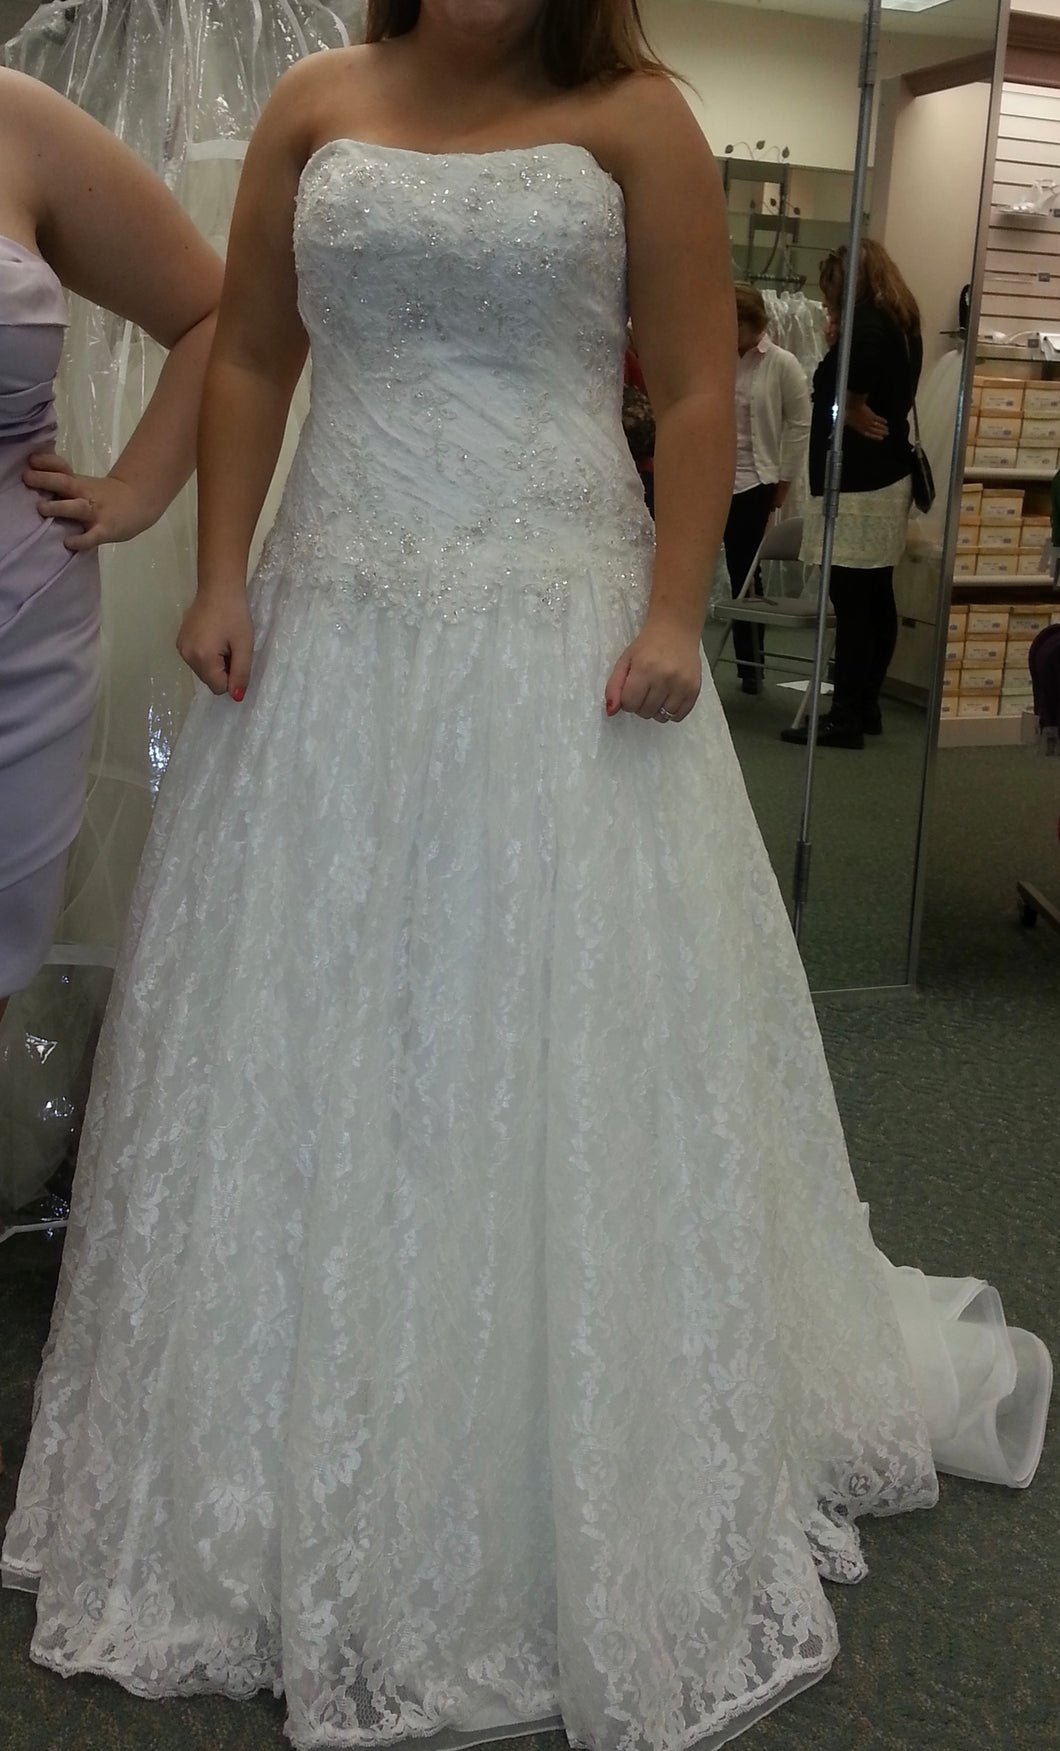 David's Bridal 'WG3561' wedding dress size-10 NEW